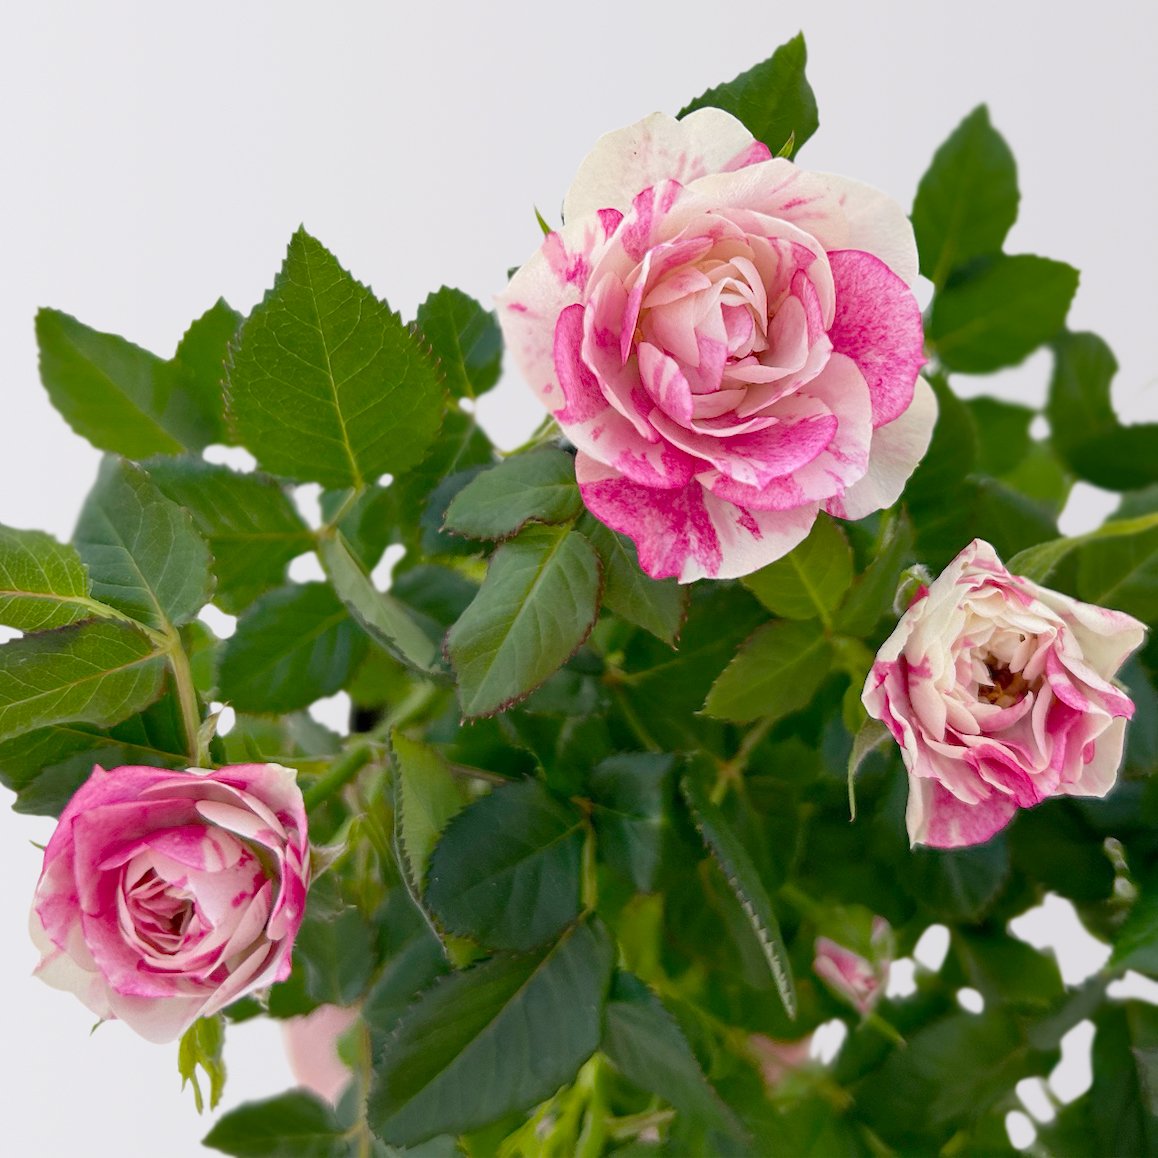 Rose 'Pia' rosa-weiß, Topf-Ø 10,5 cm, Höhe ca. 30 cm, 3er-Set